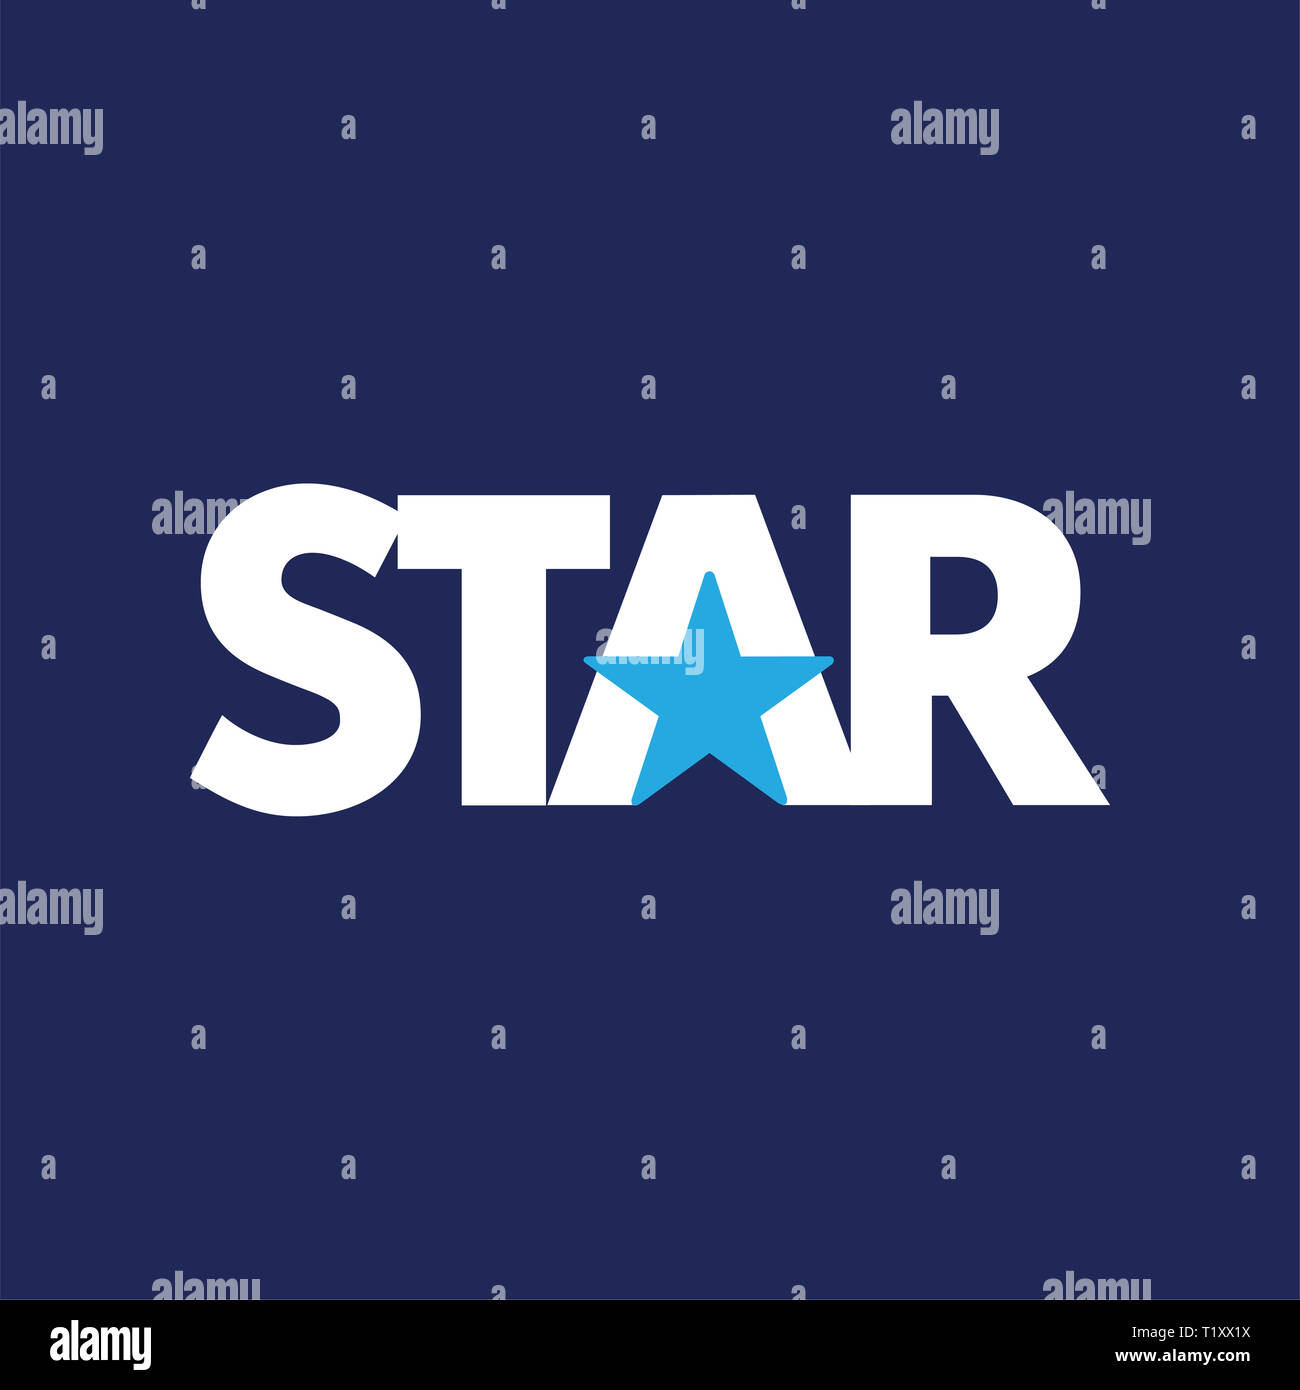 star logo design template Stock Photo